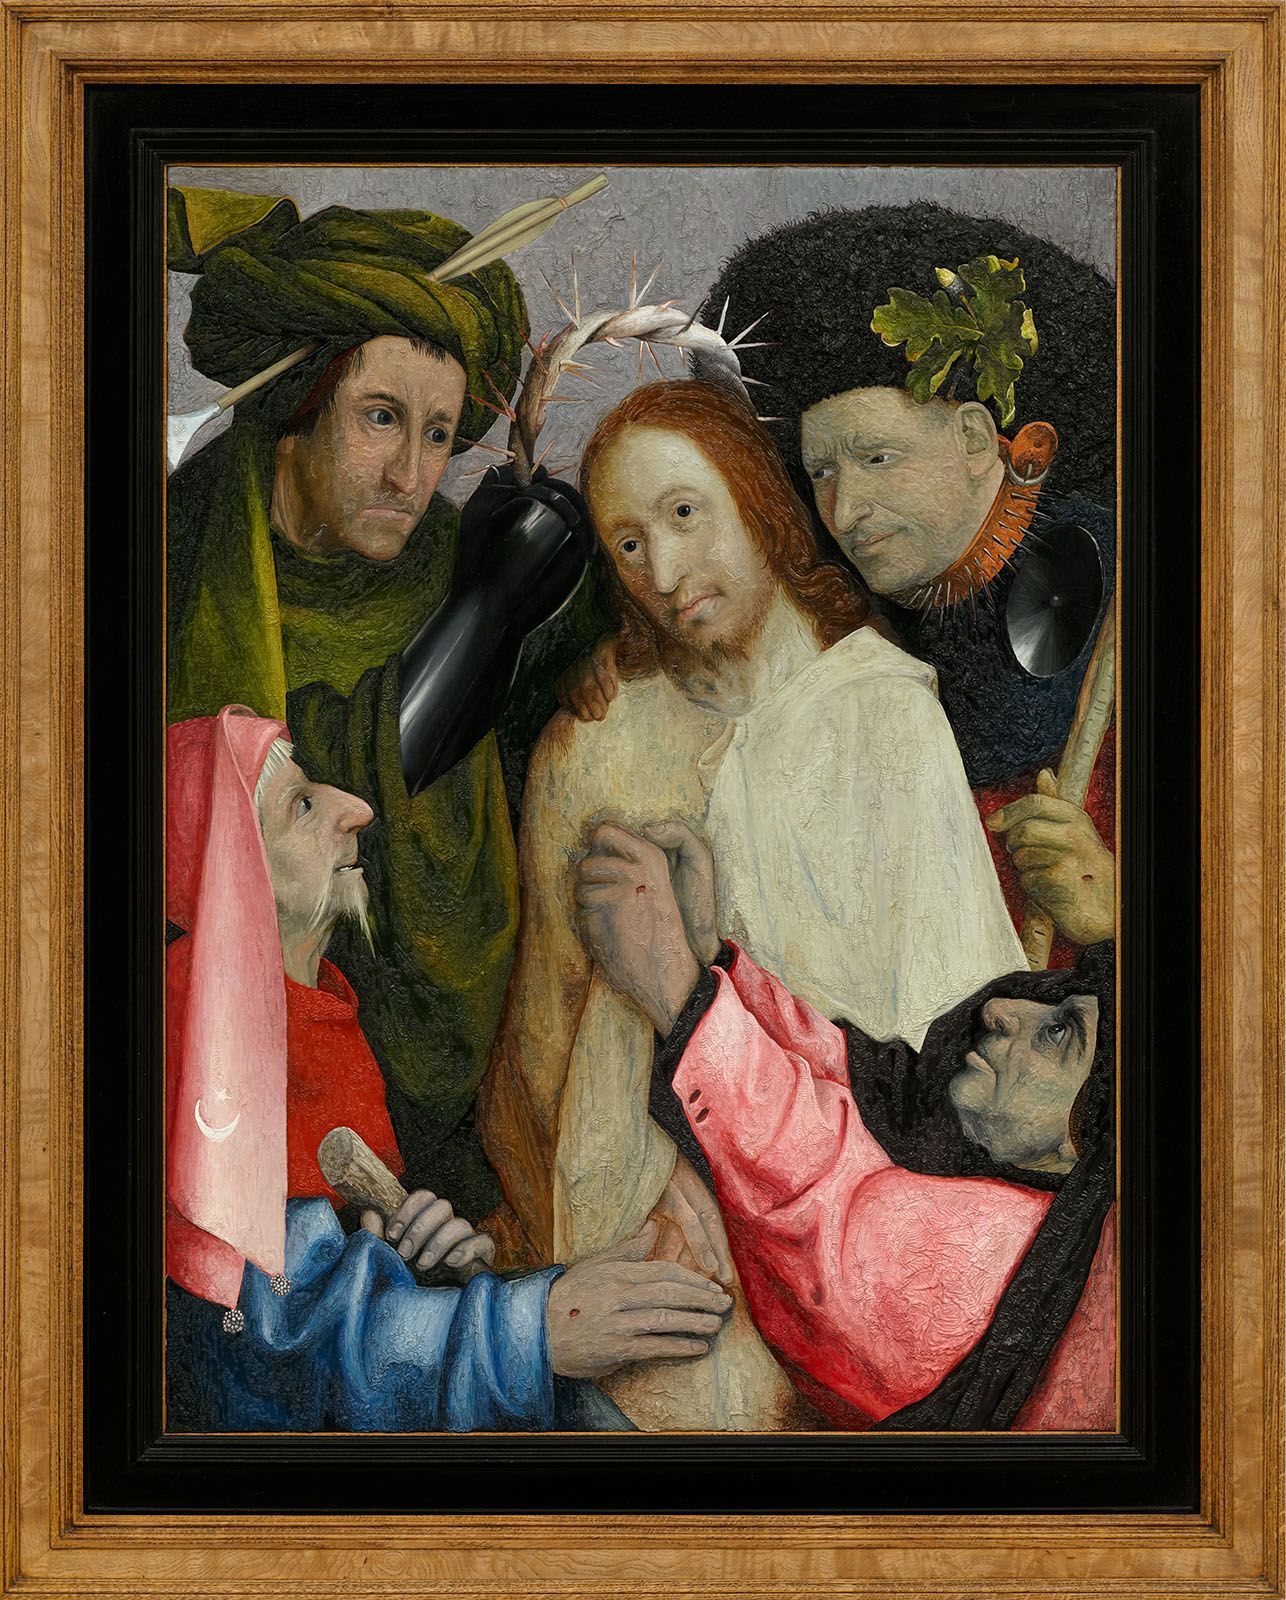 An interpretation by Mark Alexander of "Christ Mocked" originally by Hieronymus Bosch, showcasing five figures.